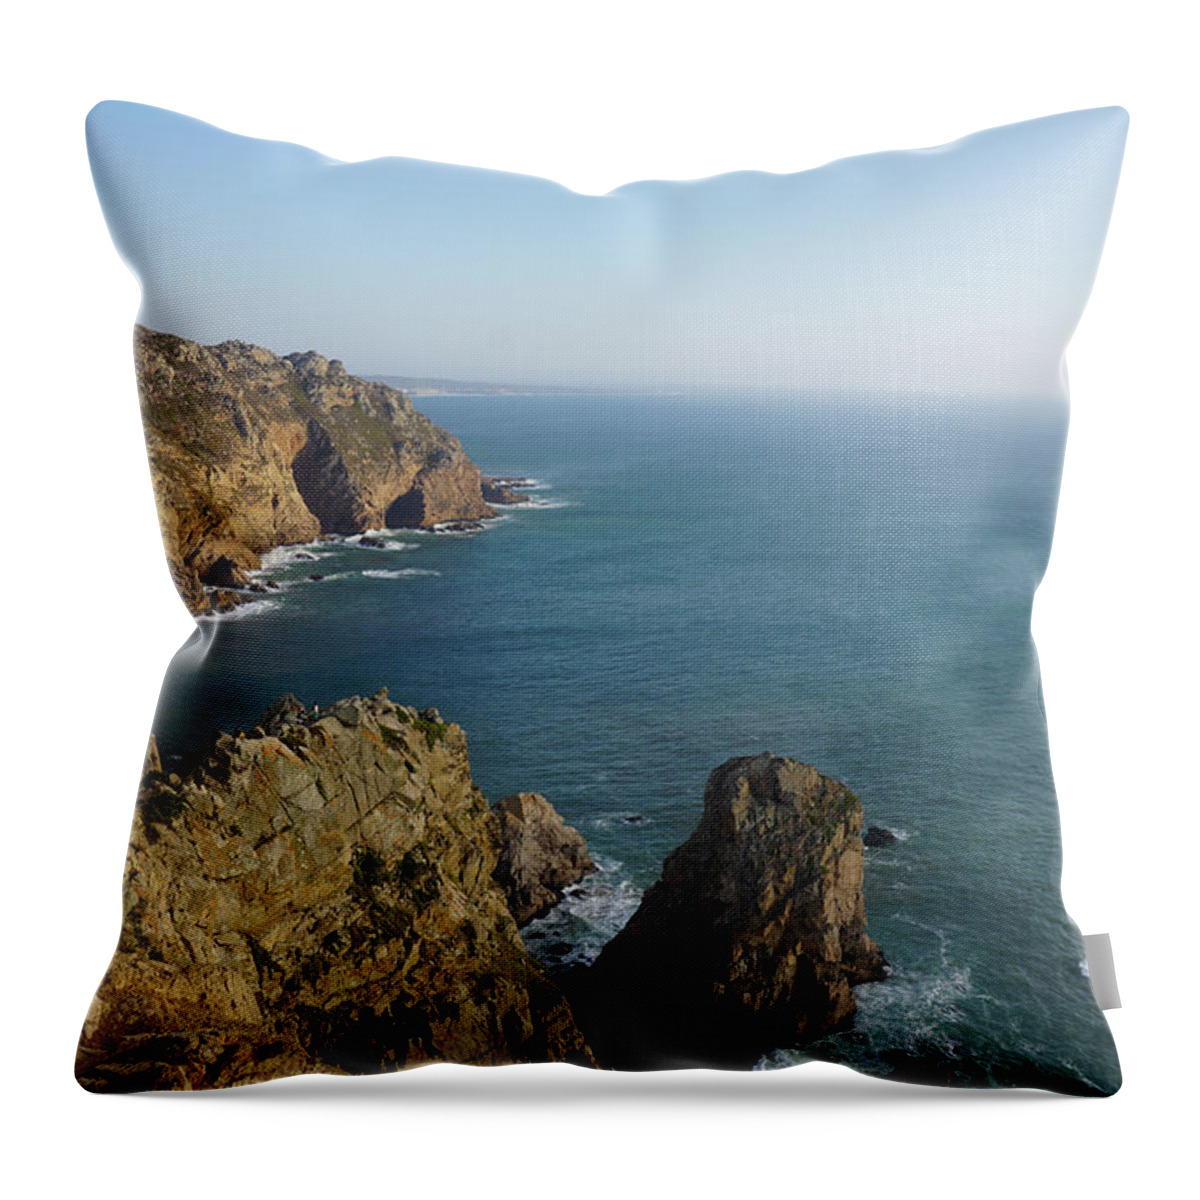 Cabo Da Roca Throw Pillow featuring the photograph Rocks near to Cabo da Roca by Piotr Dulski